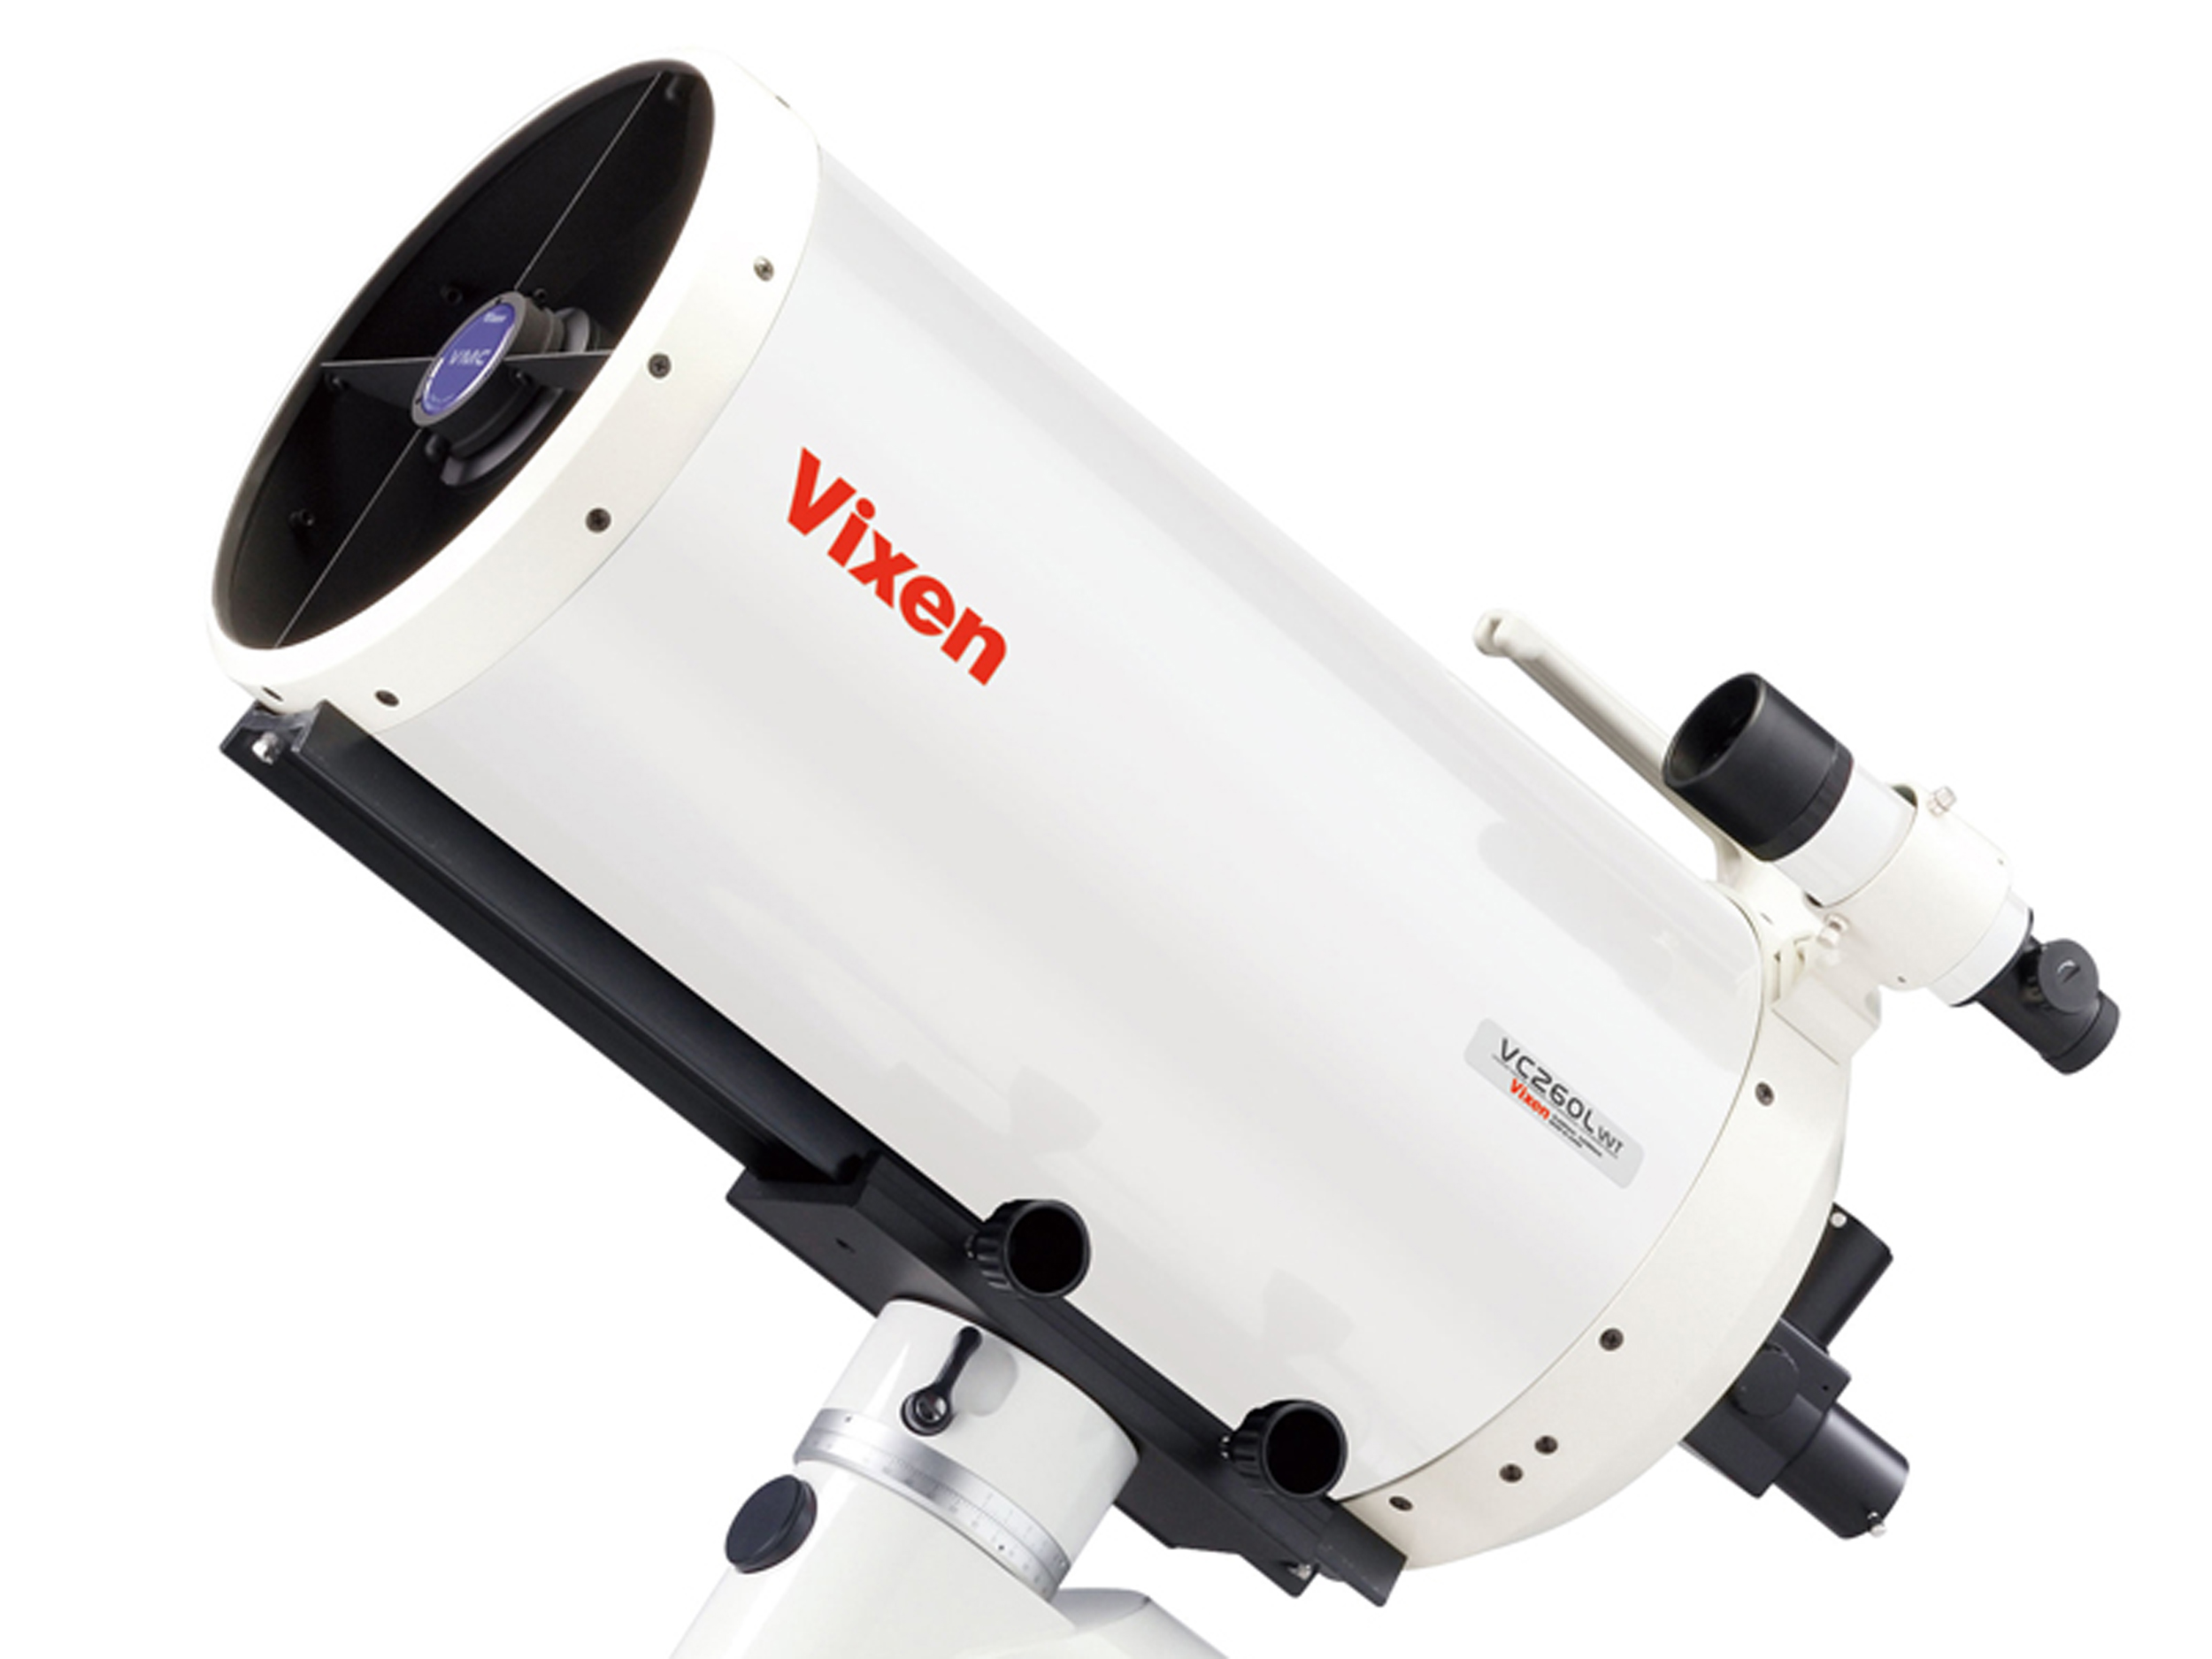 Vixen VMC260L Maksutov-Cassegrain-Teleskop (AXD Version) (Refurbished)